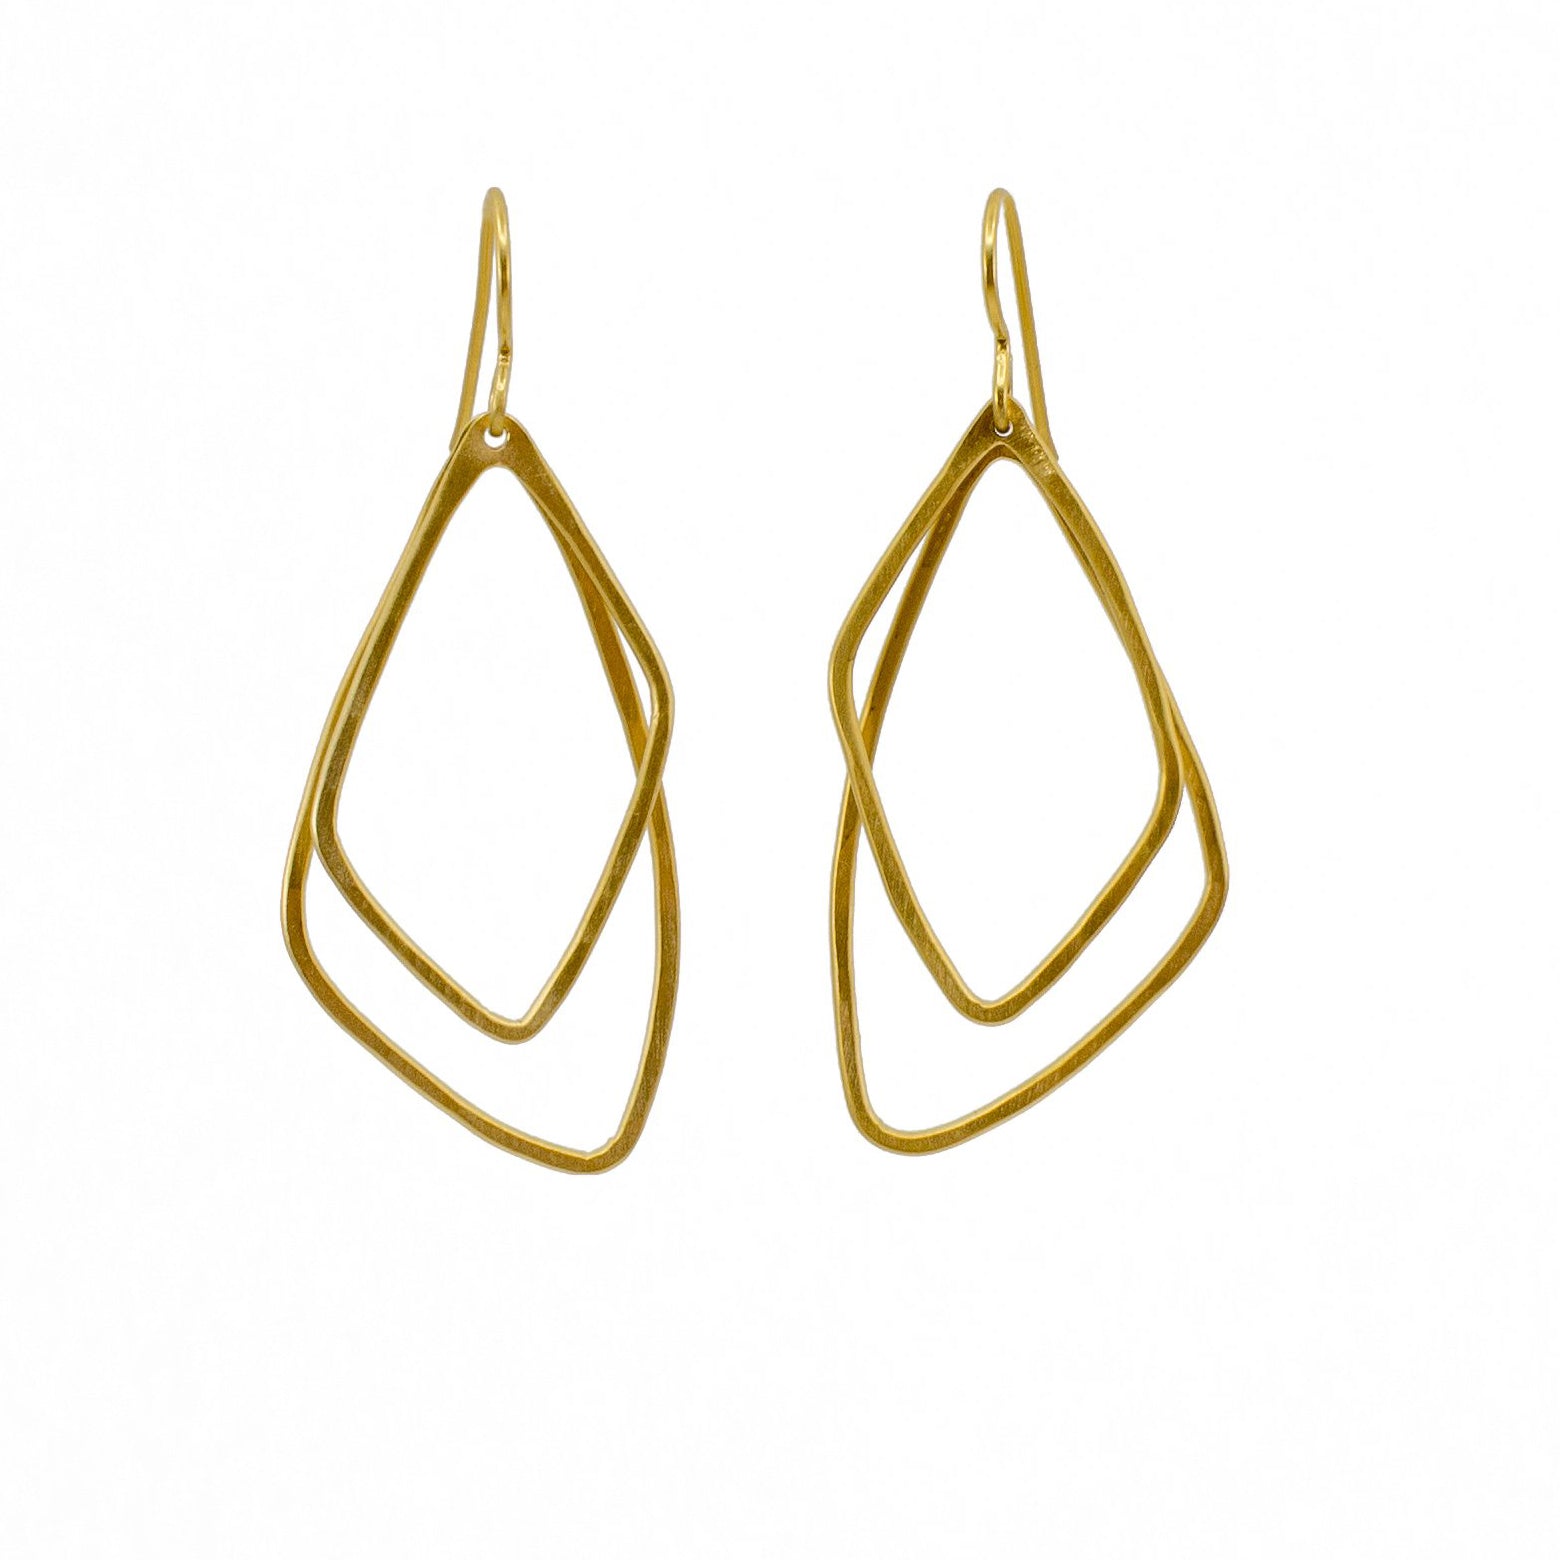 Shapes Earrings - Medium - Sterling Silver or 18K Gold Vermeil